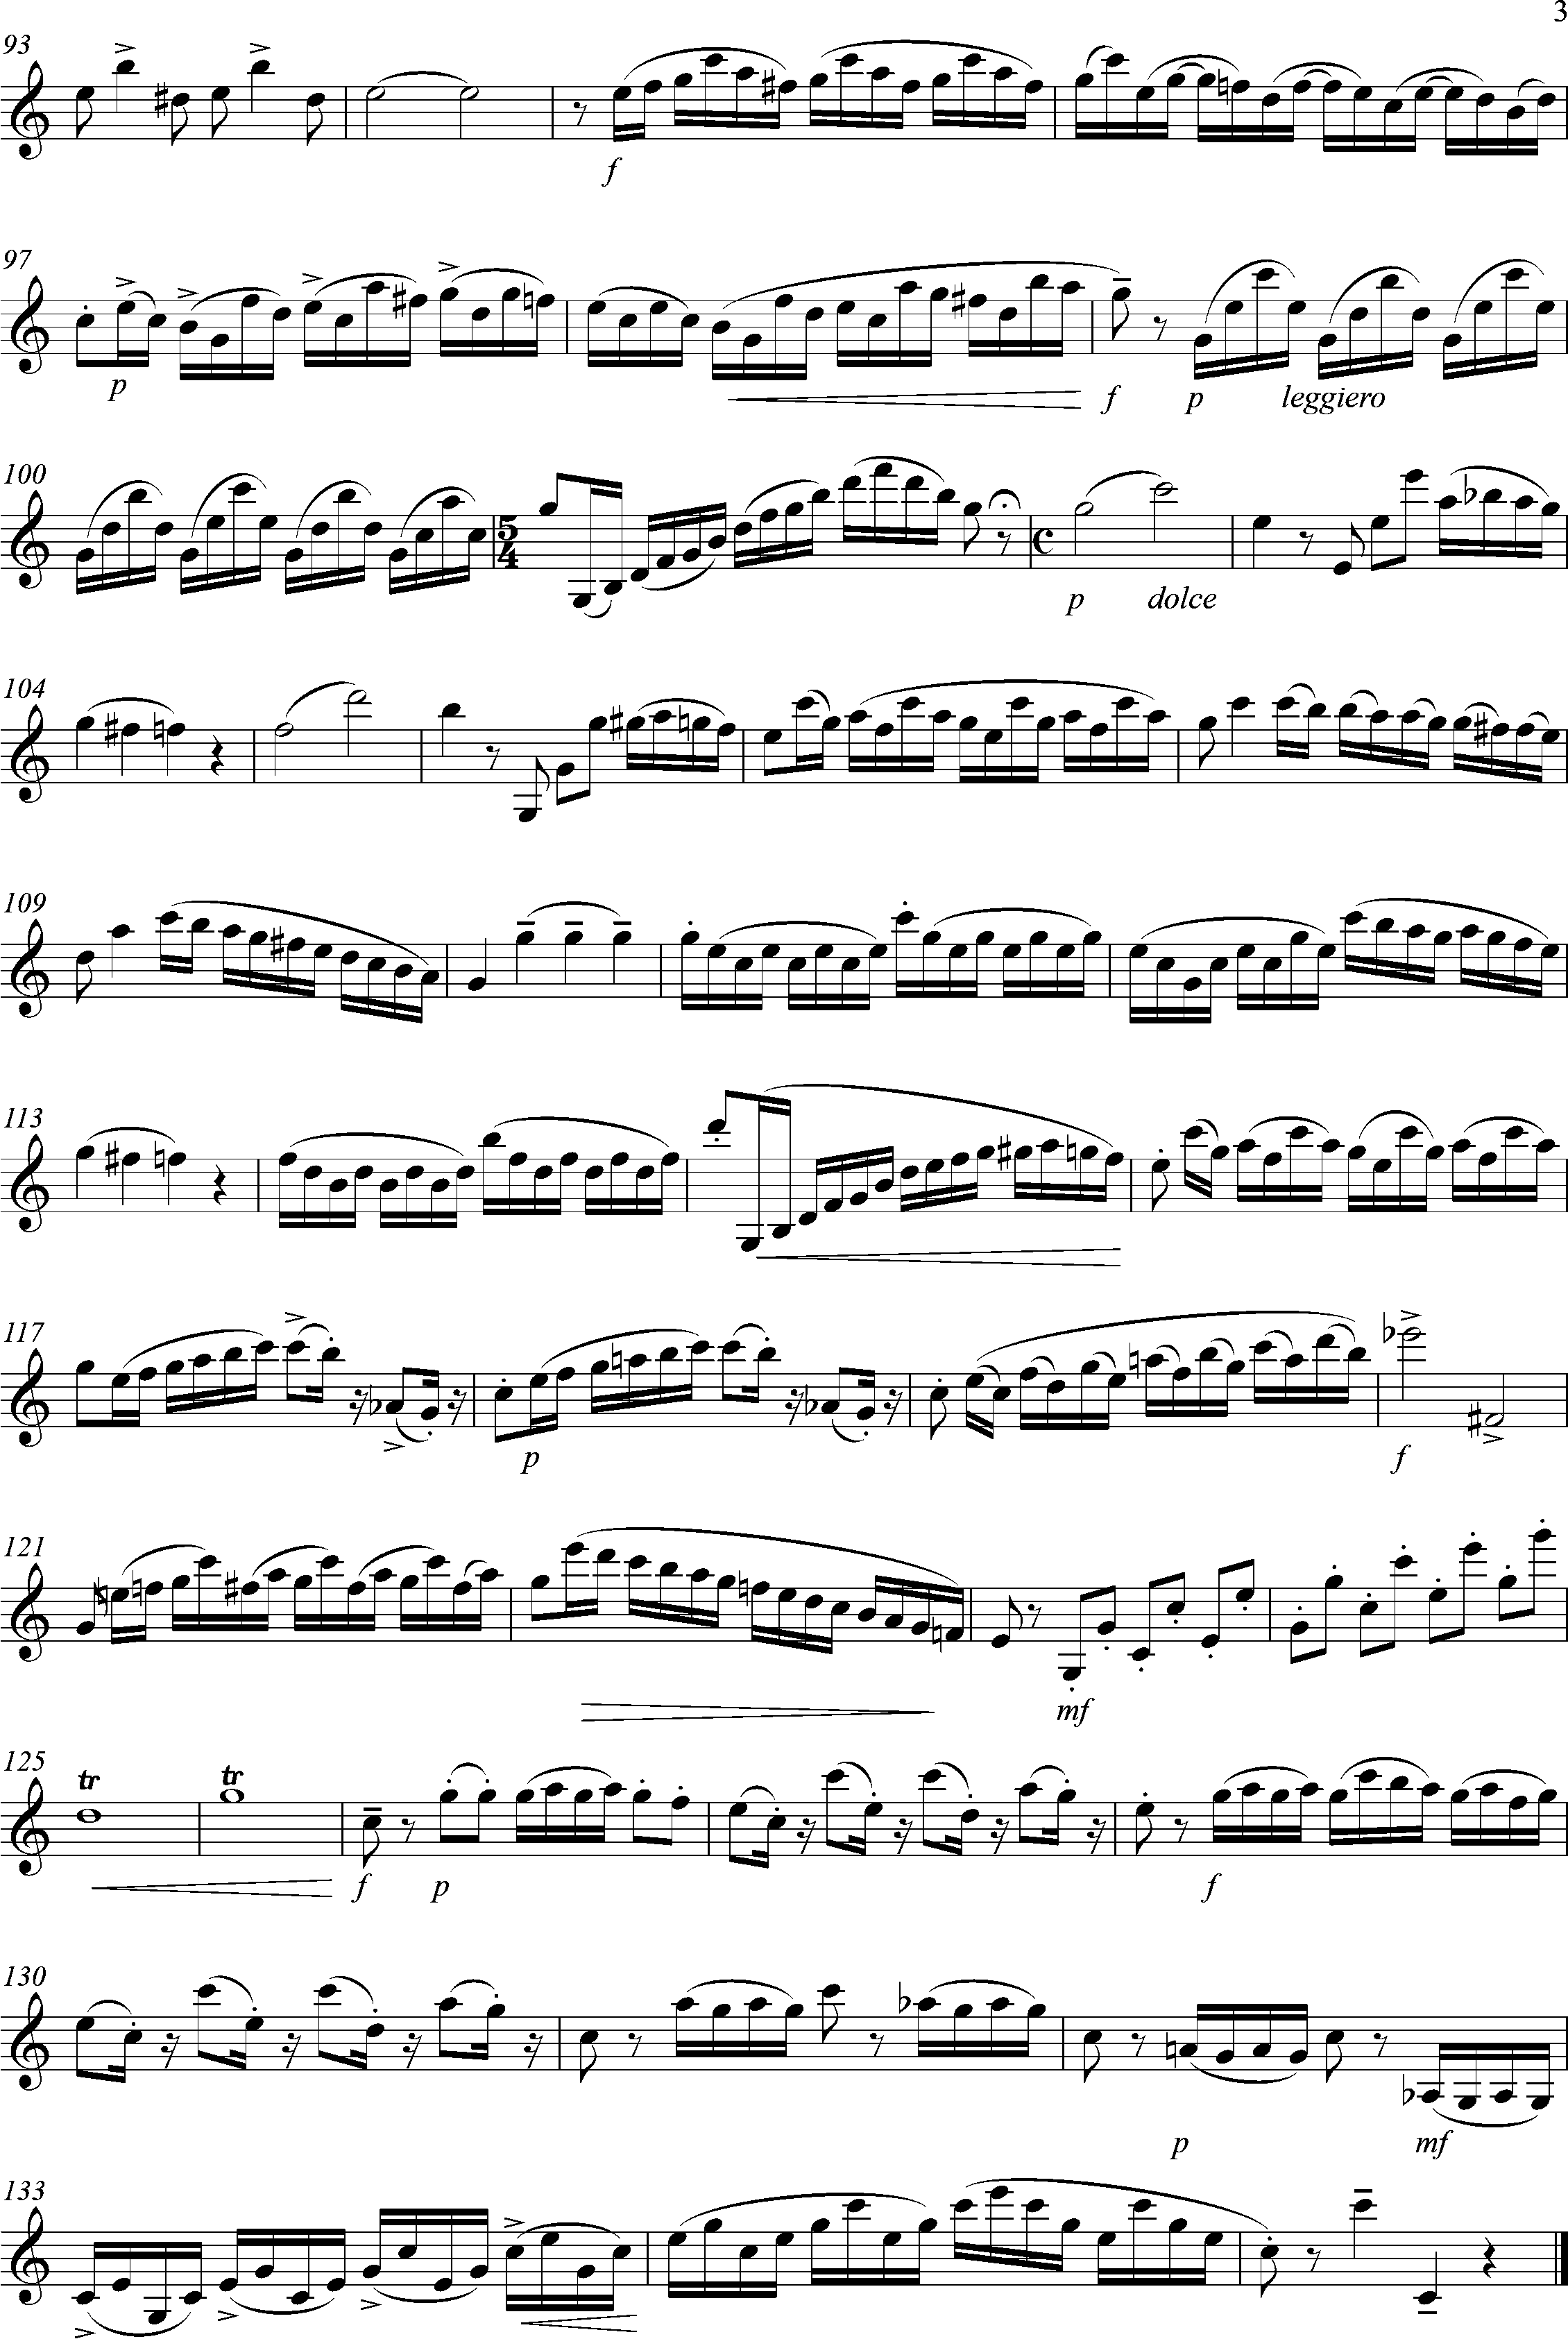 Clarinet Study No 1, Page 3